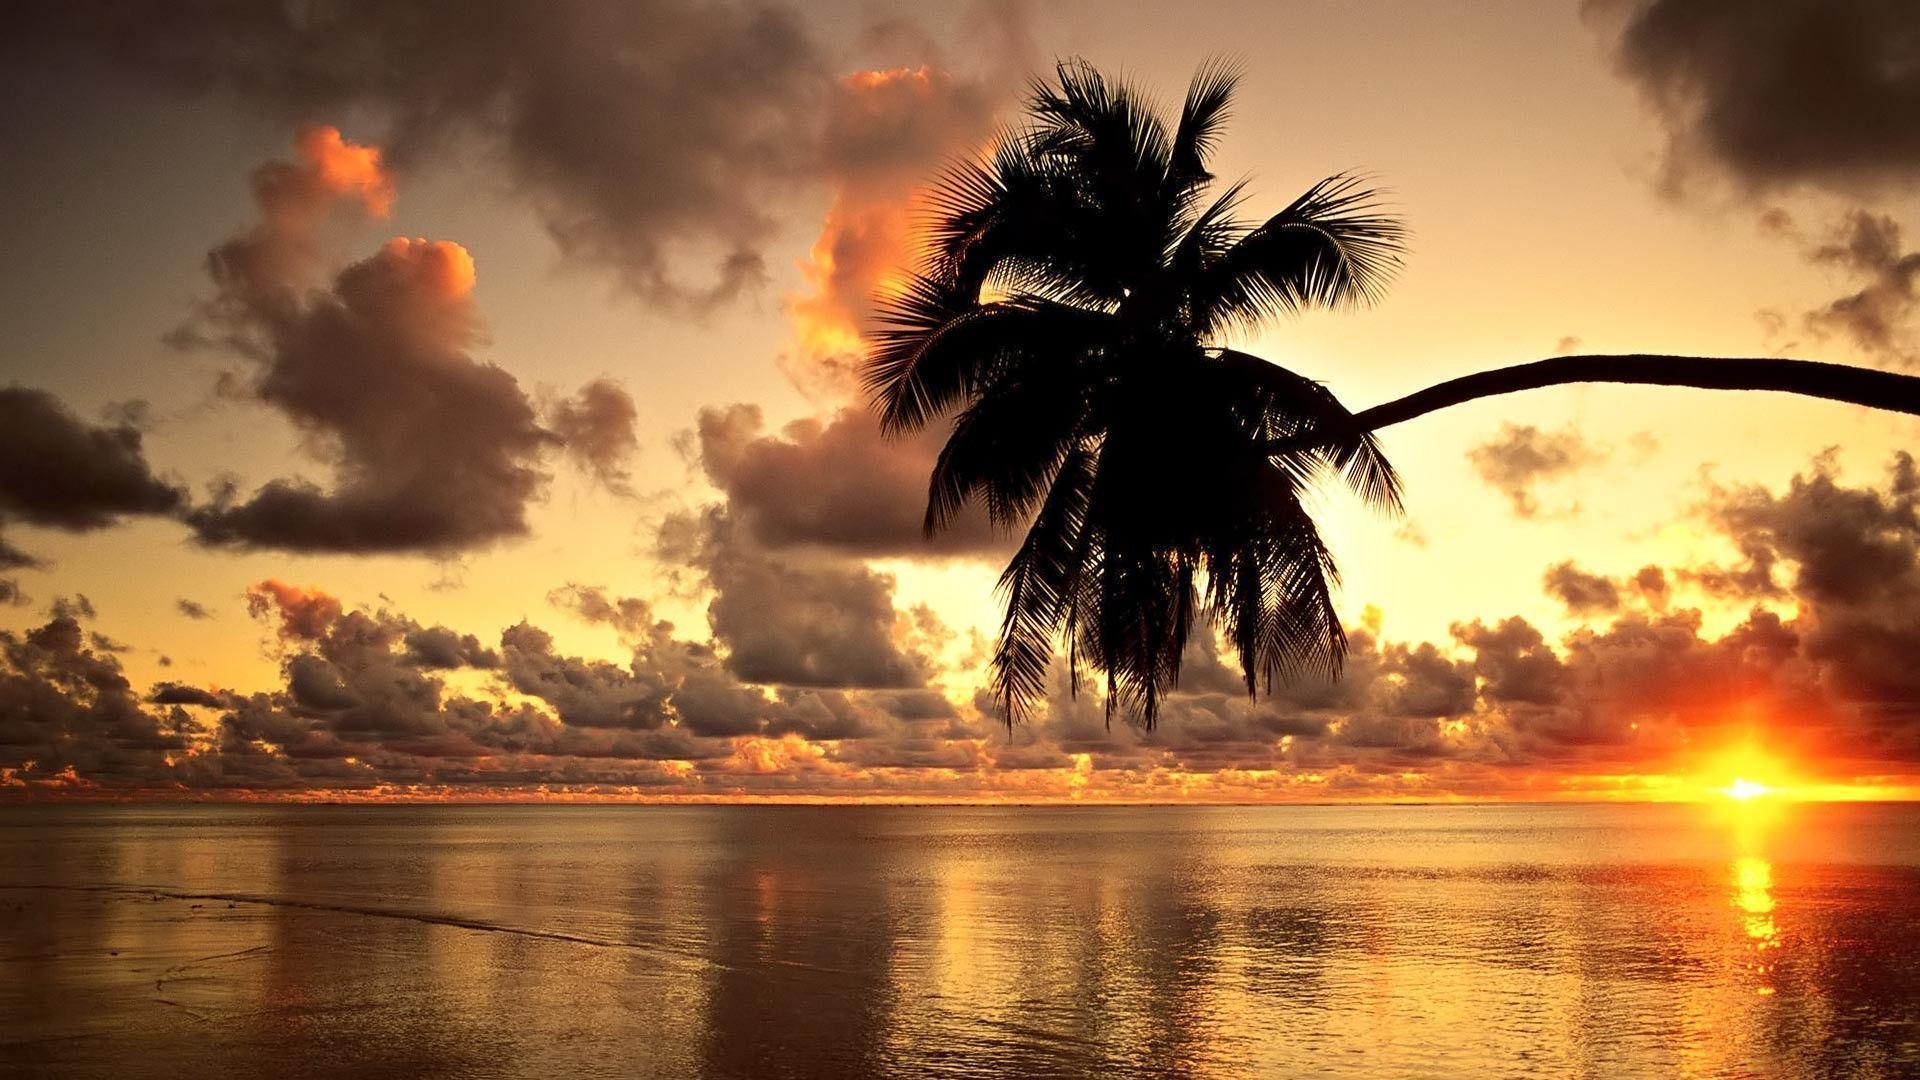 Beach Palm Tree Sunset Wallpaper 16837 HD Wallpaper in Beach n